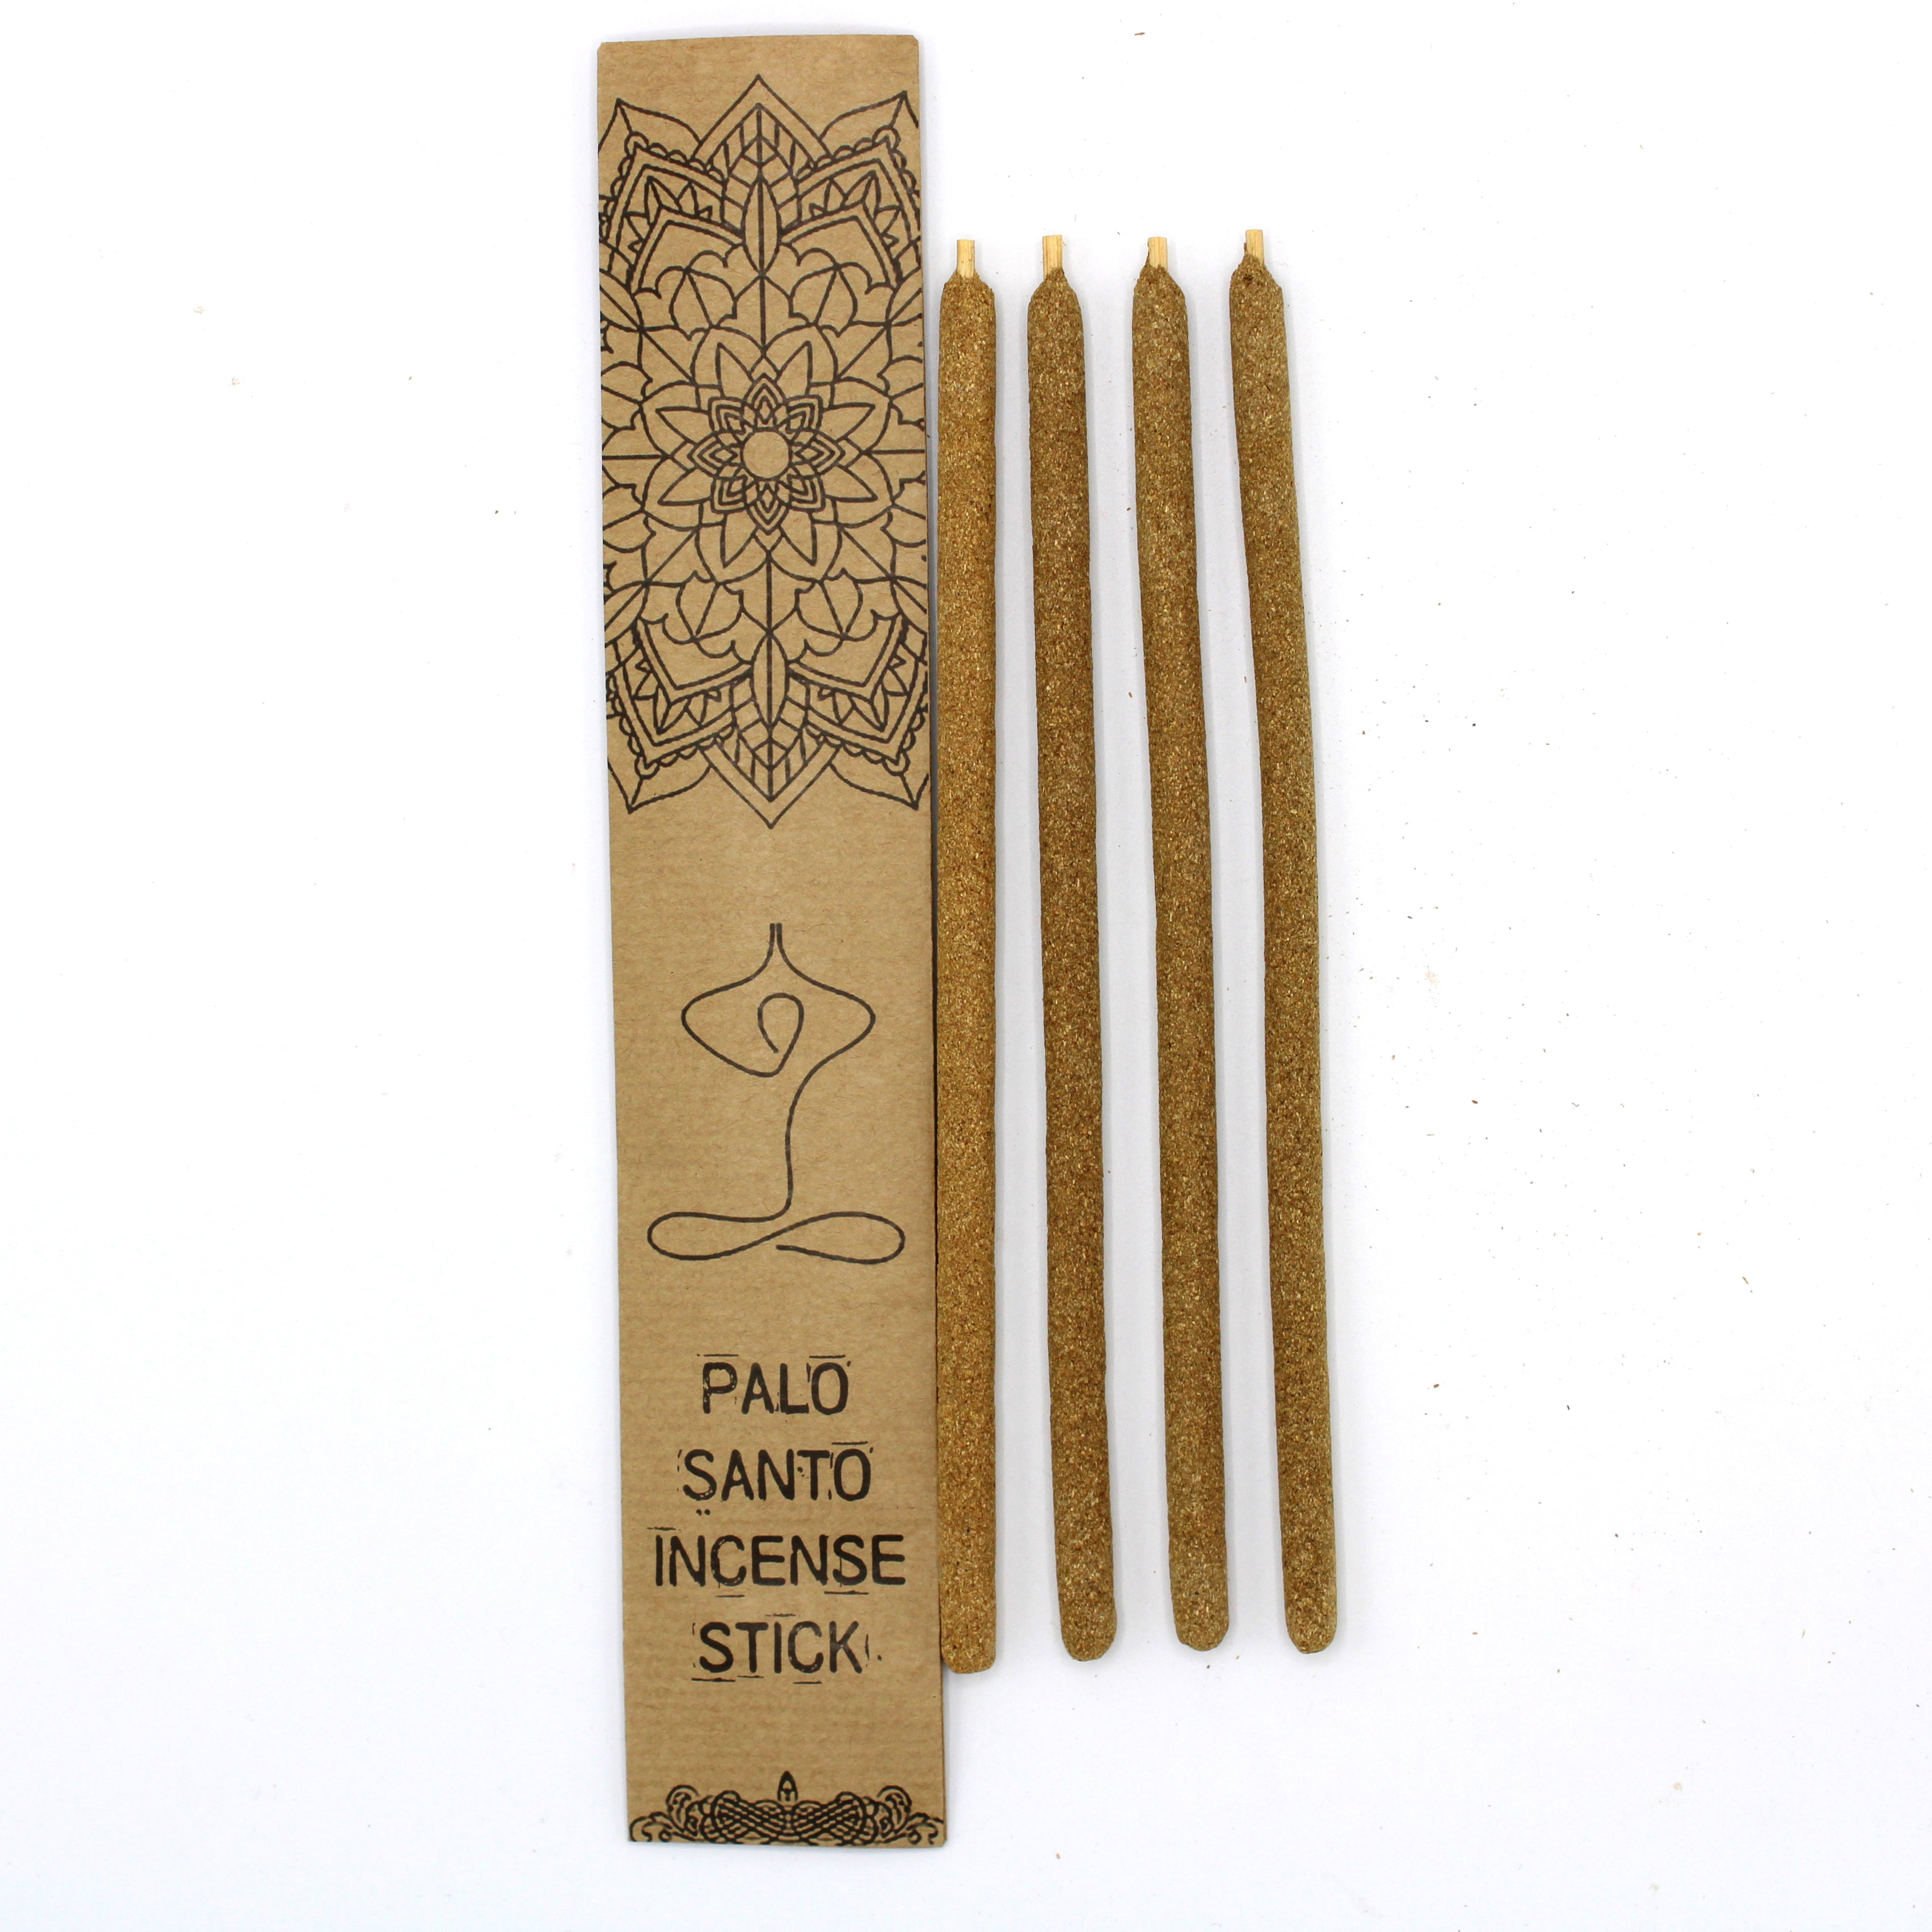 View Palo Santo Large Incense Sticks Classic information